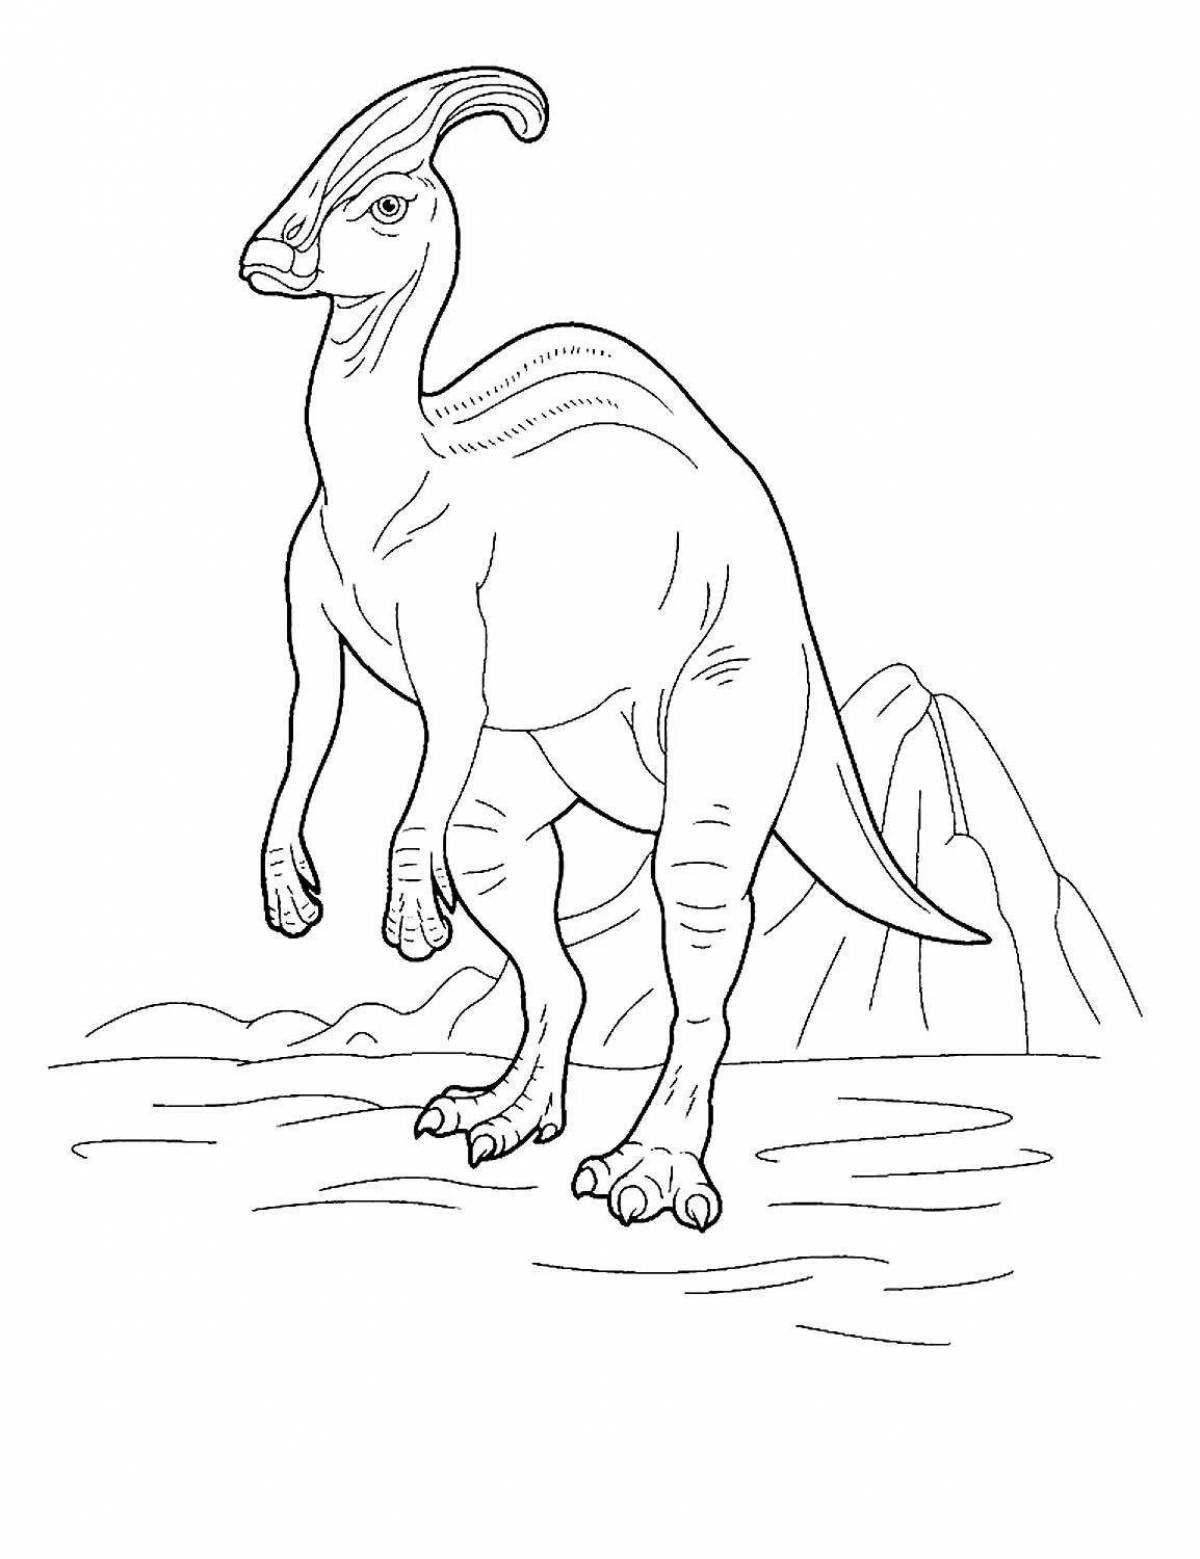 Impressive parasaurolophus dinosaur coloring book